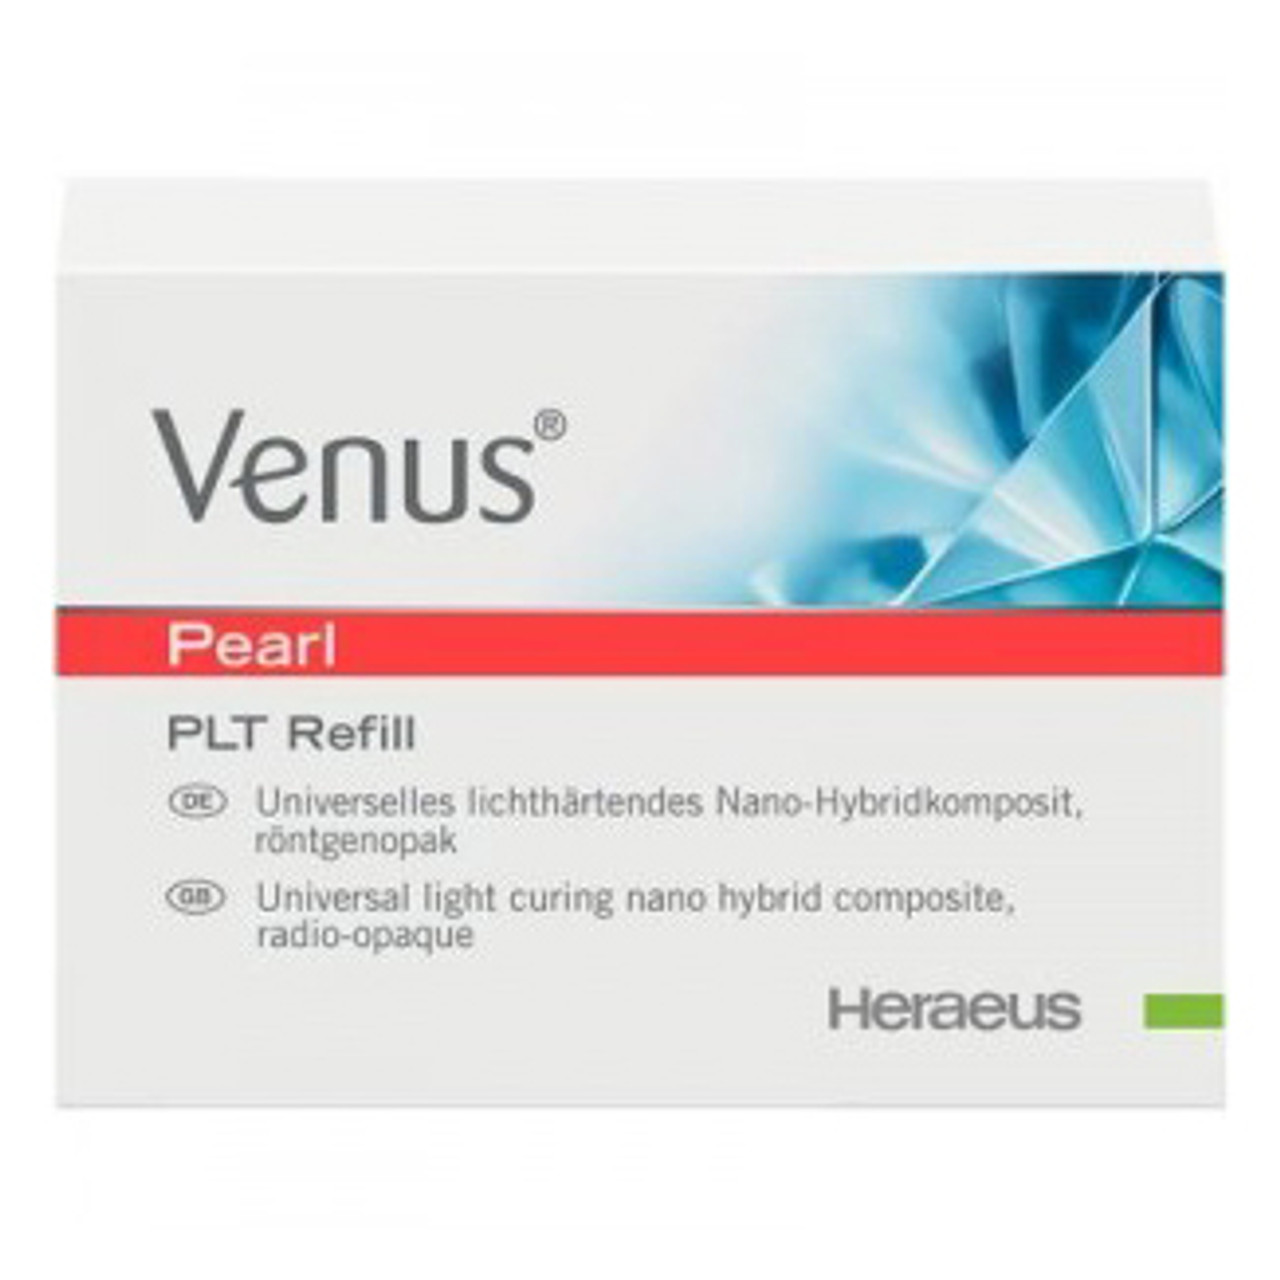 Venus Pearl PLT Refill 20/Pk A3